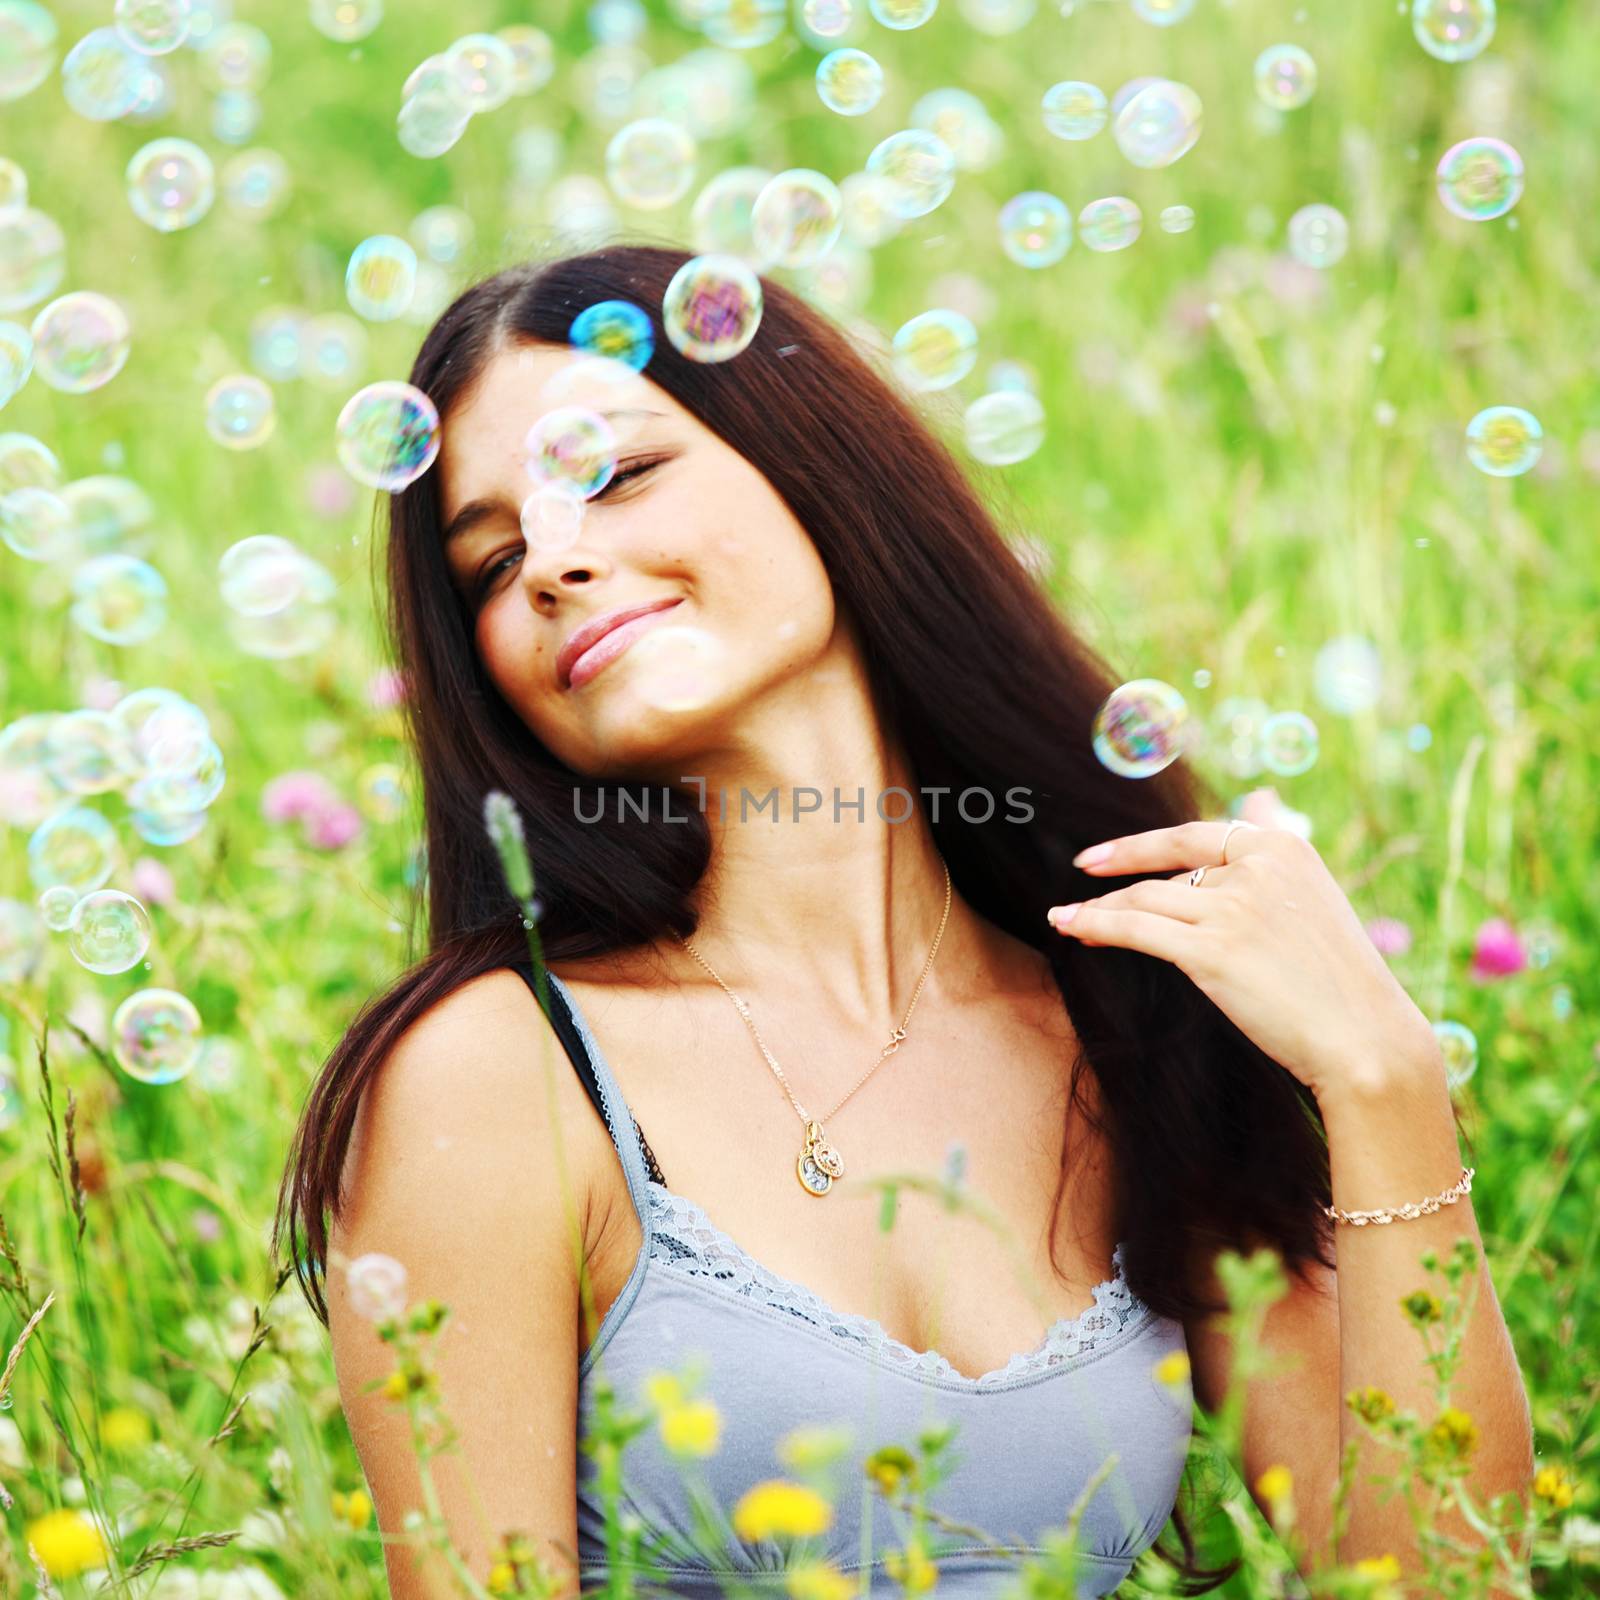 Happy woman smile in green grass soap bubbles around